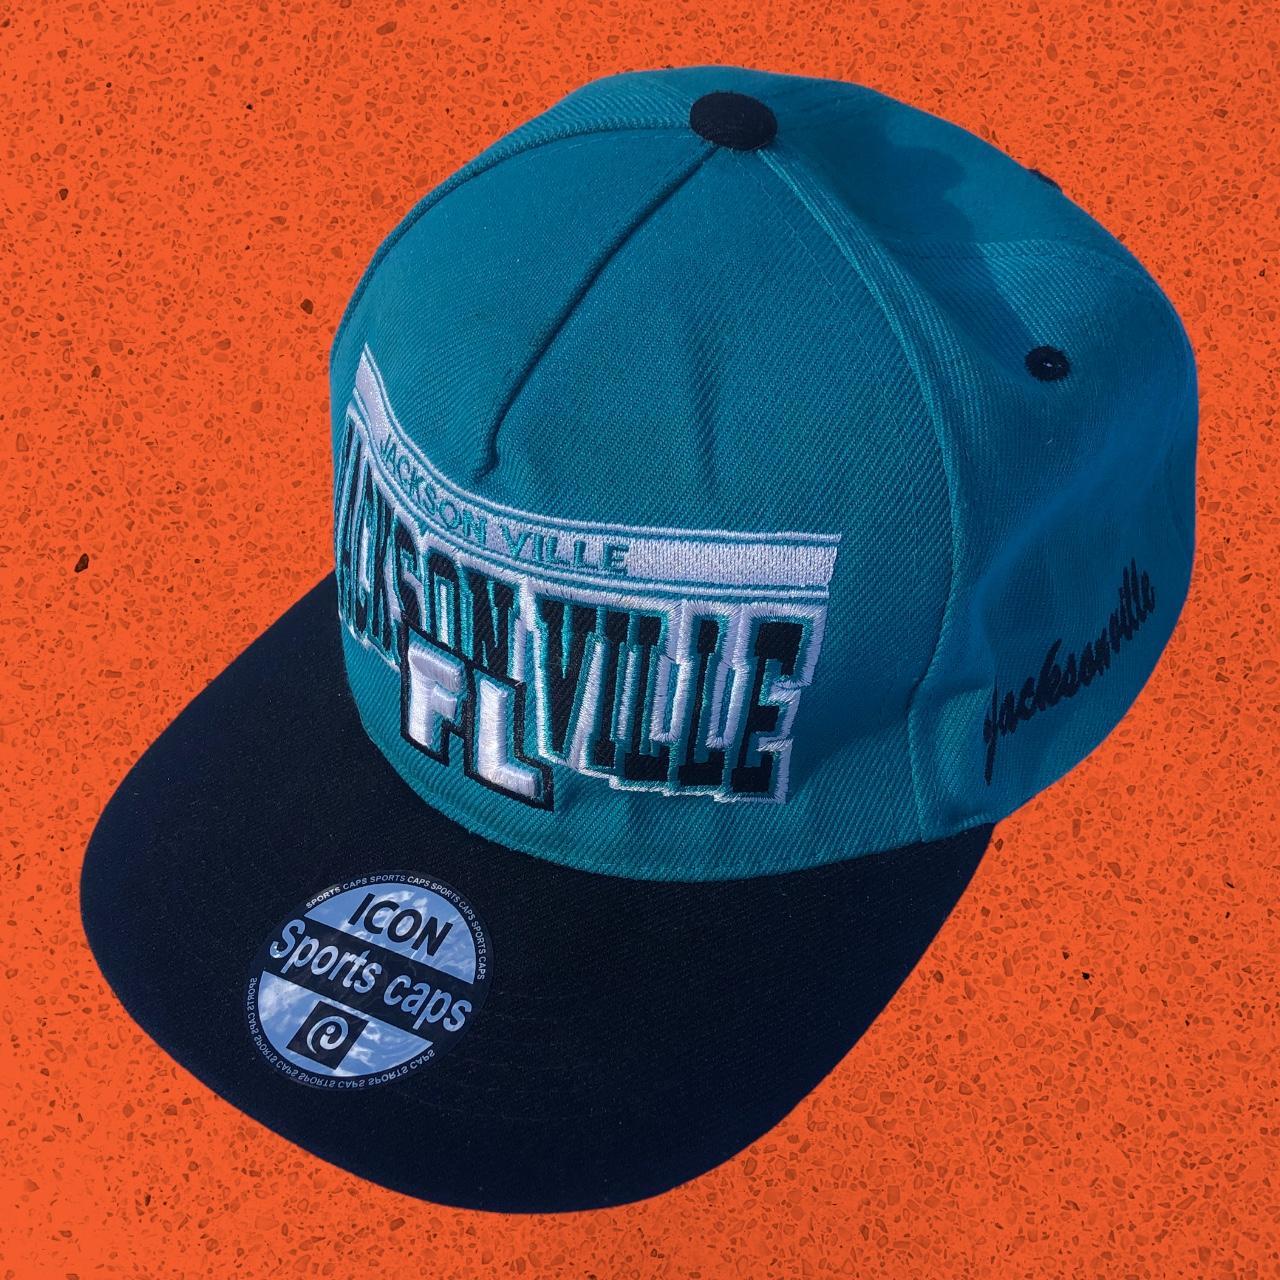 Product Image 1 - Teal blue #Jacksonville Florida hat